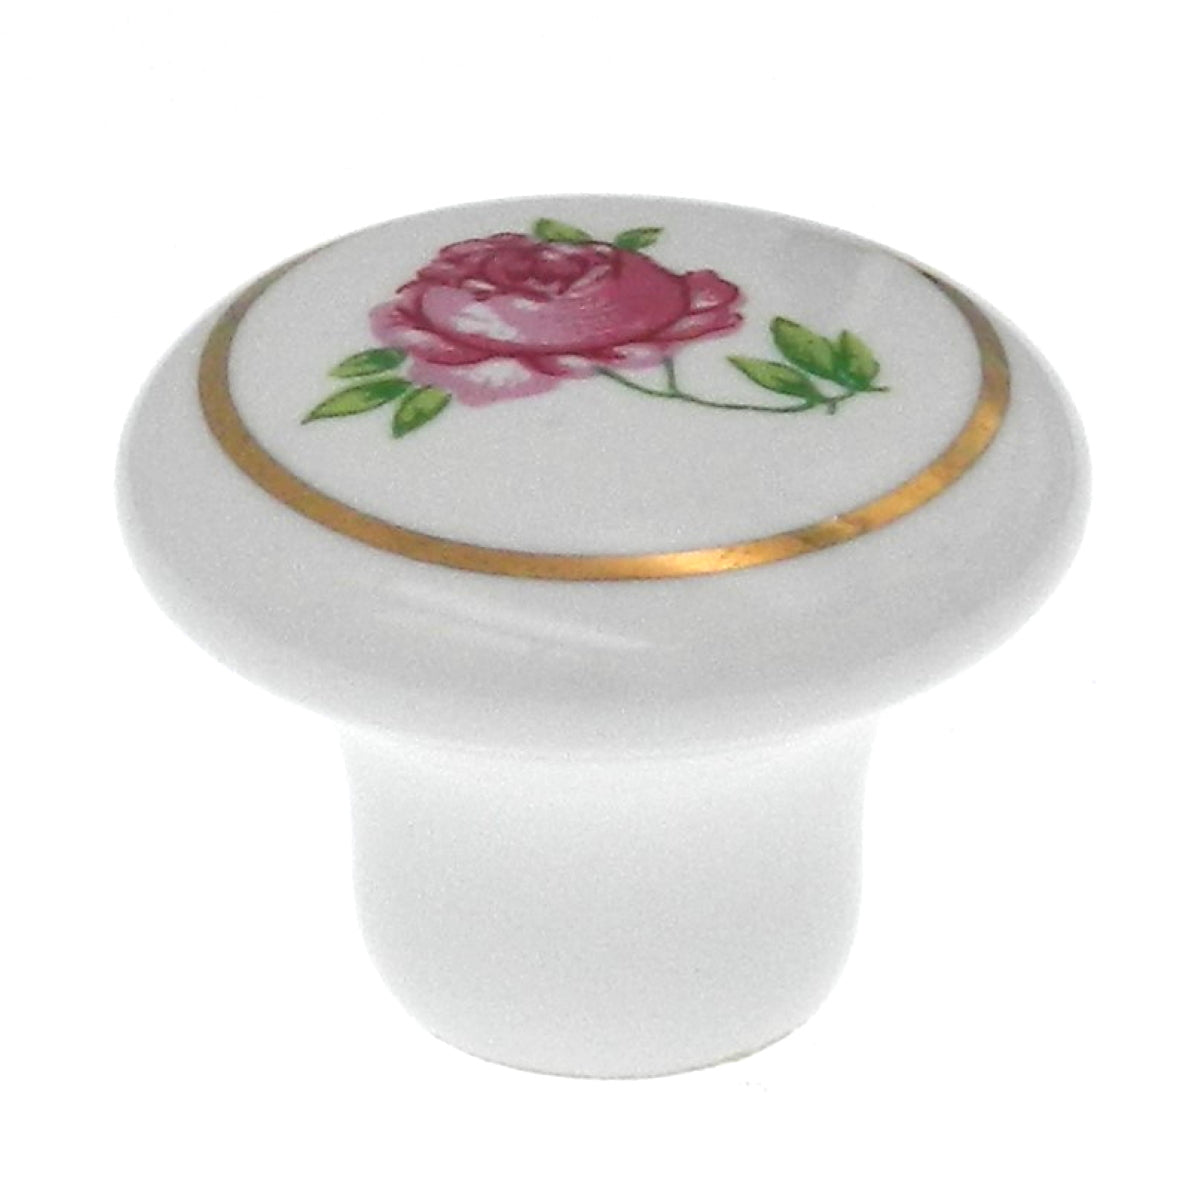 Perillas de porcelana Laurey 99909, porcelana rosa blanca, floral, 1 1/4"